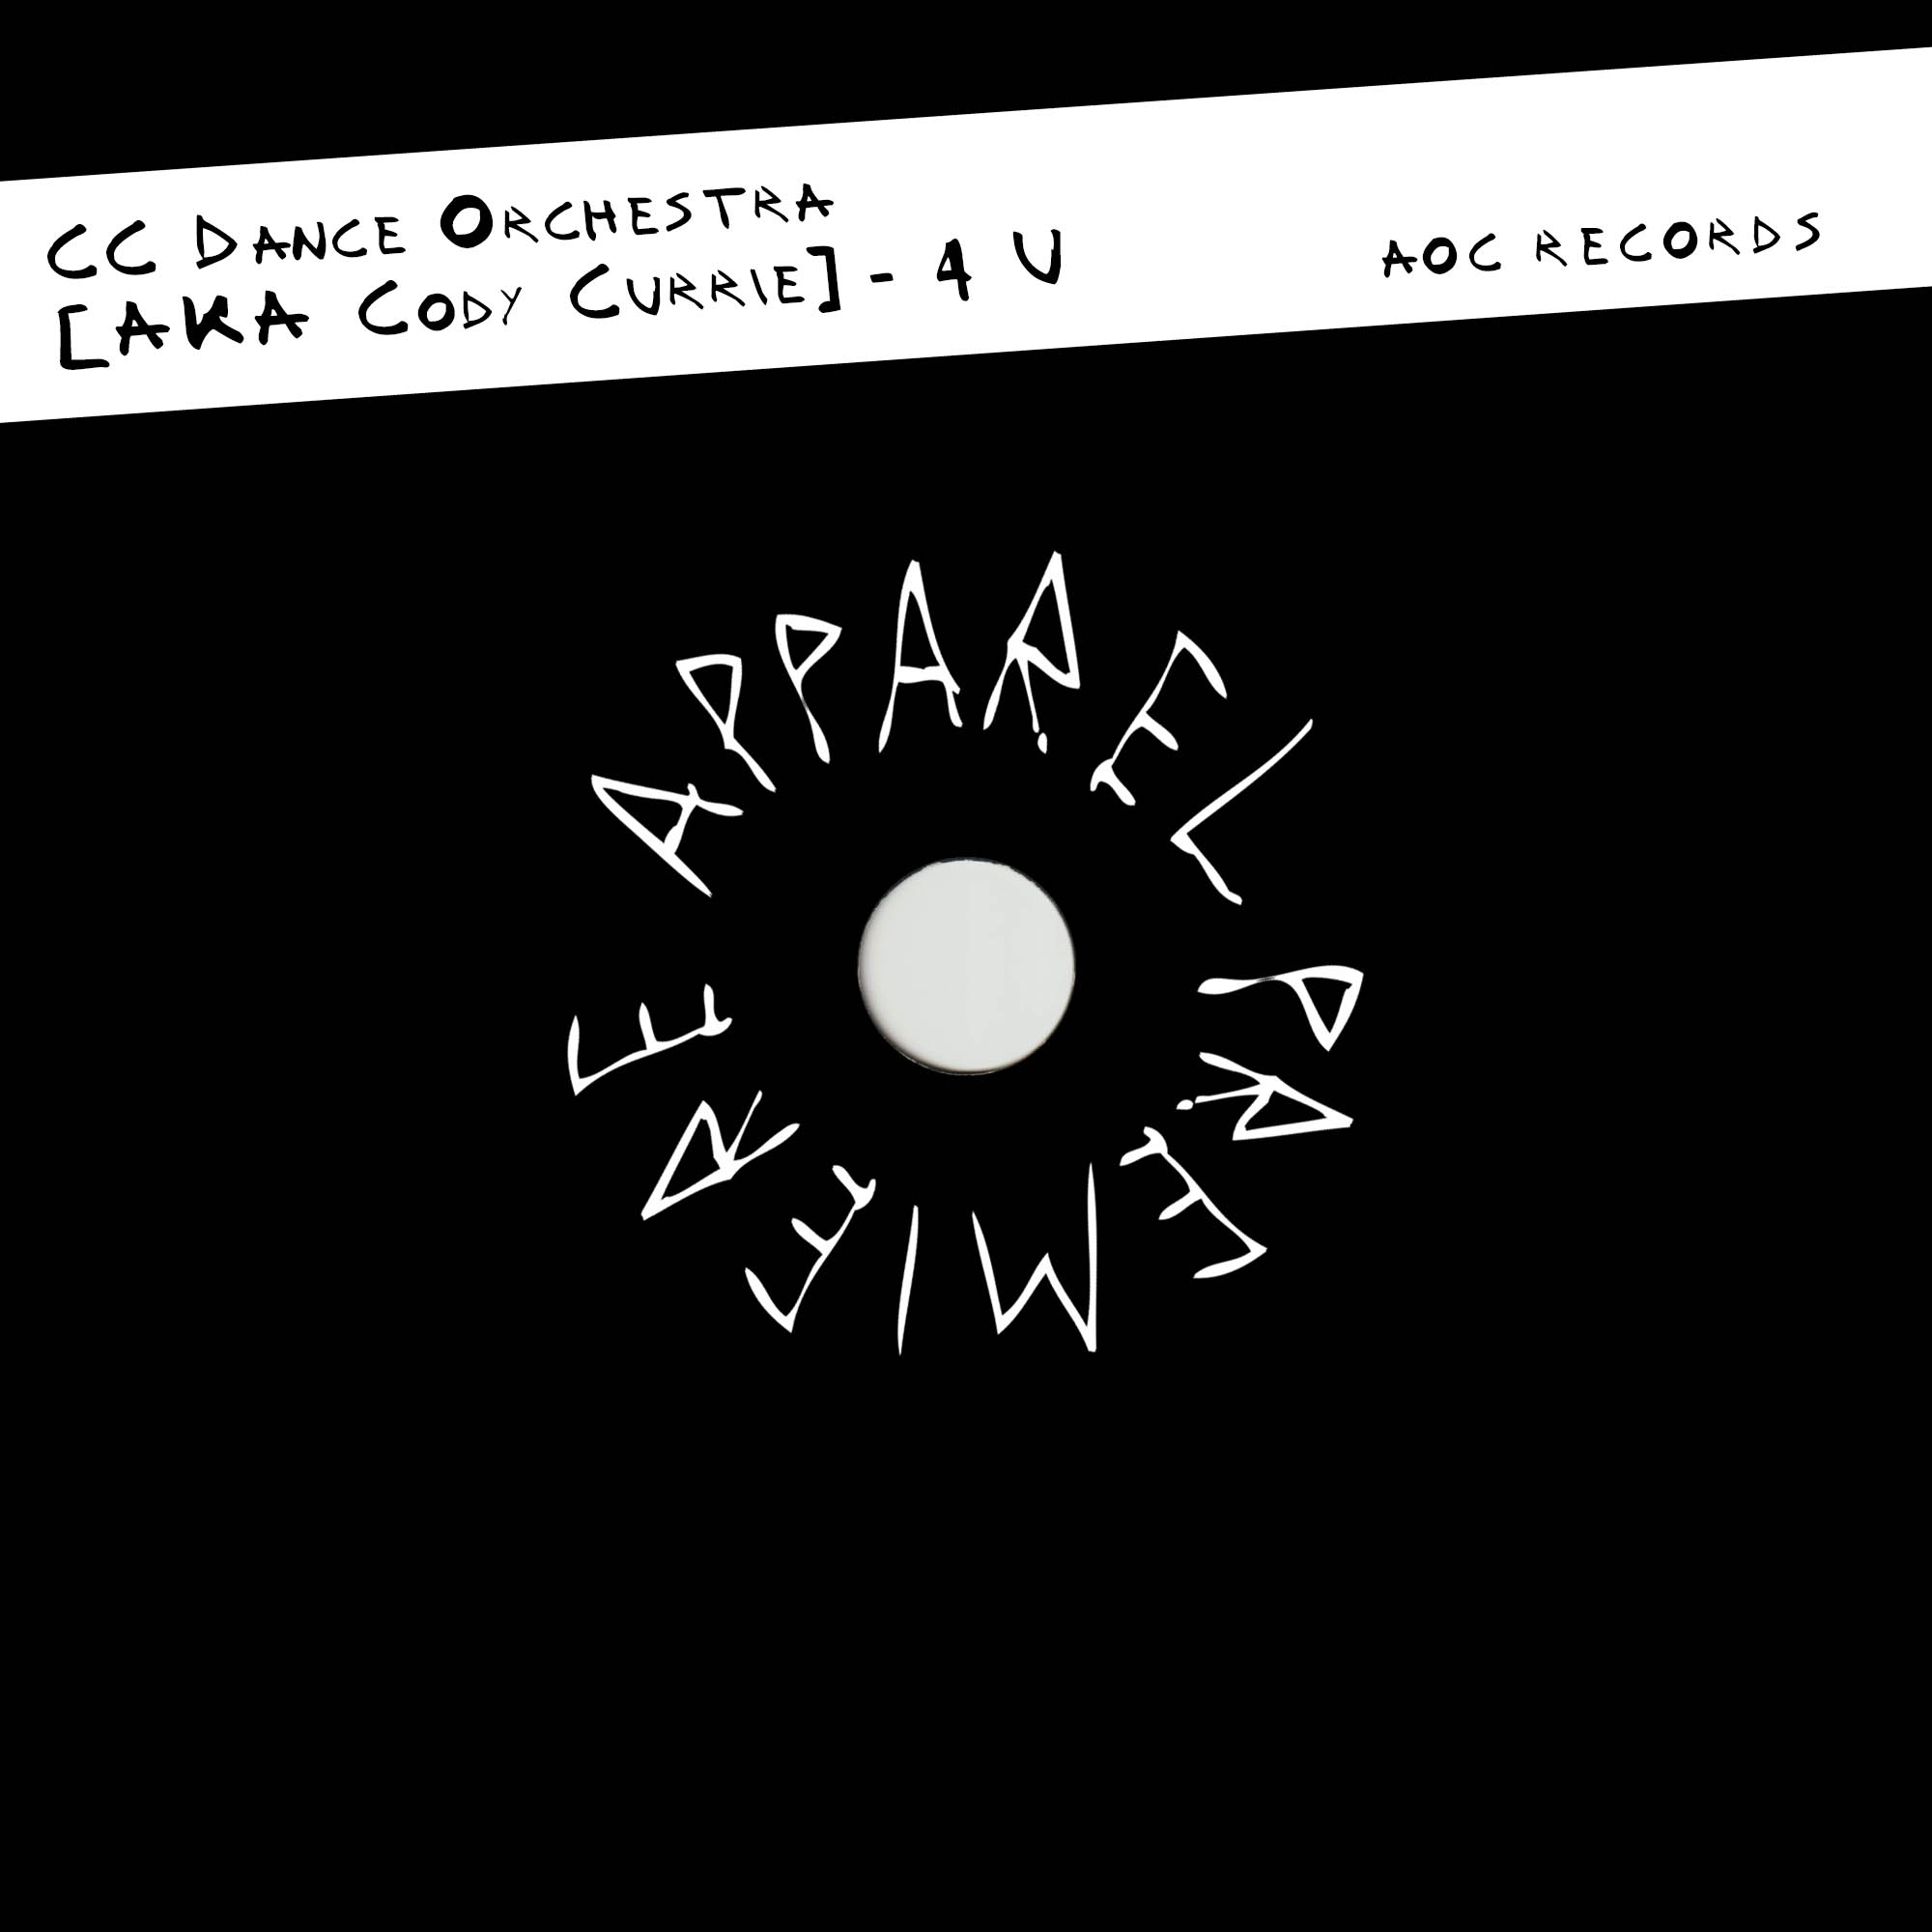 APPAREL PREMIERE CC Dance Orchestra [AKA Cody Currie] – 4 U (AOC Records)